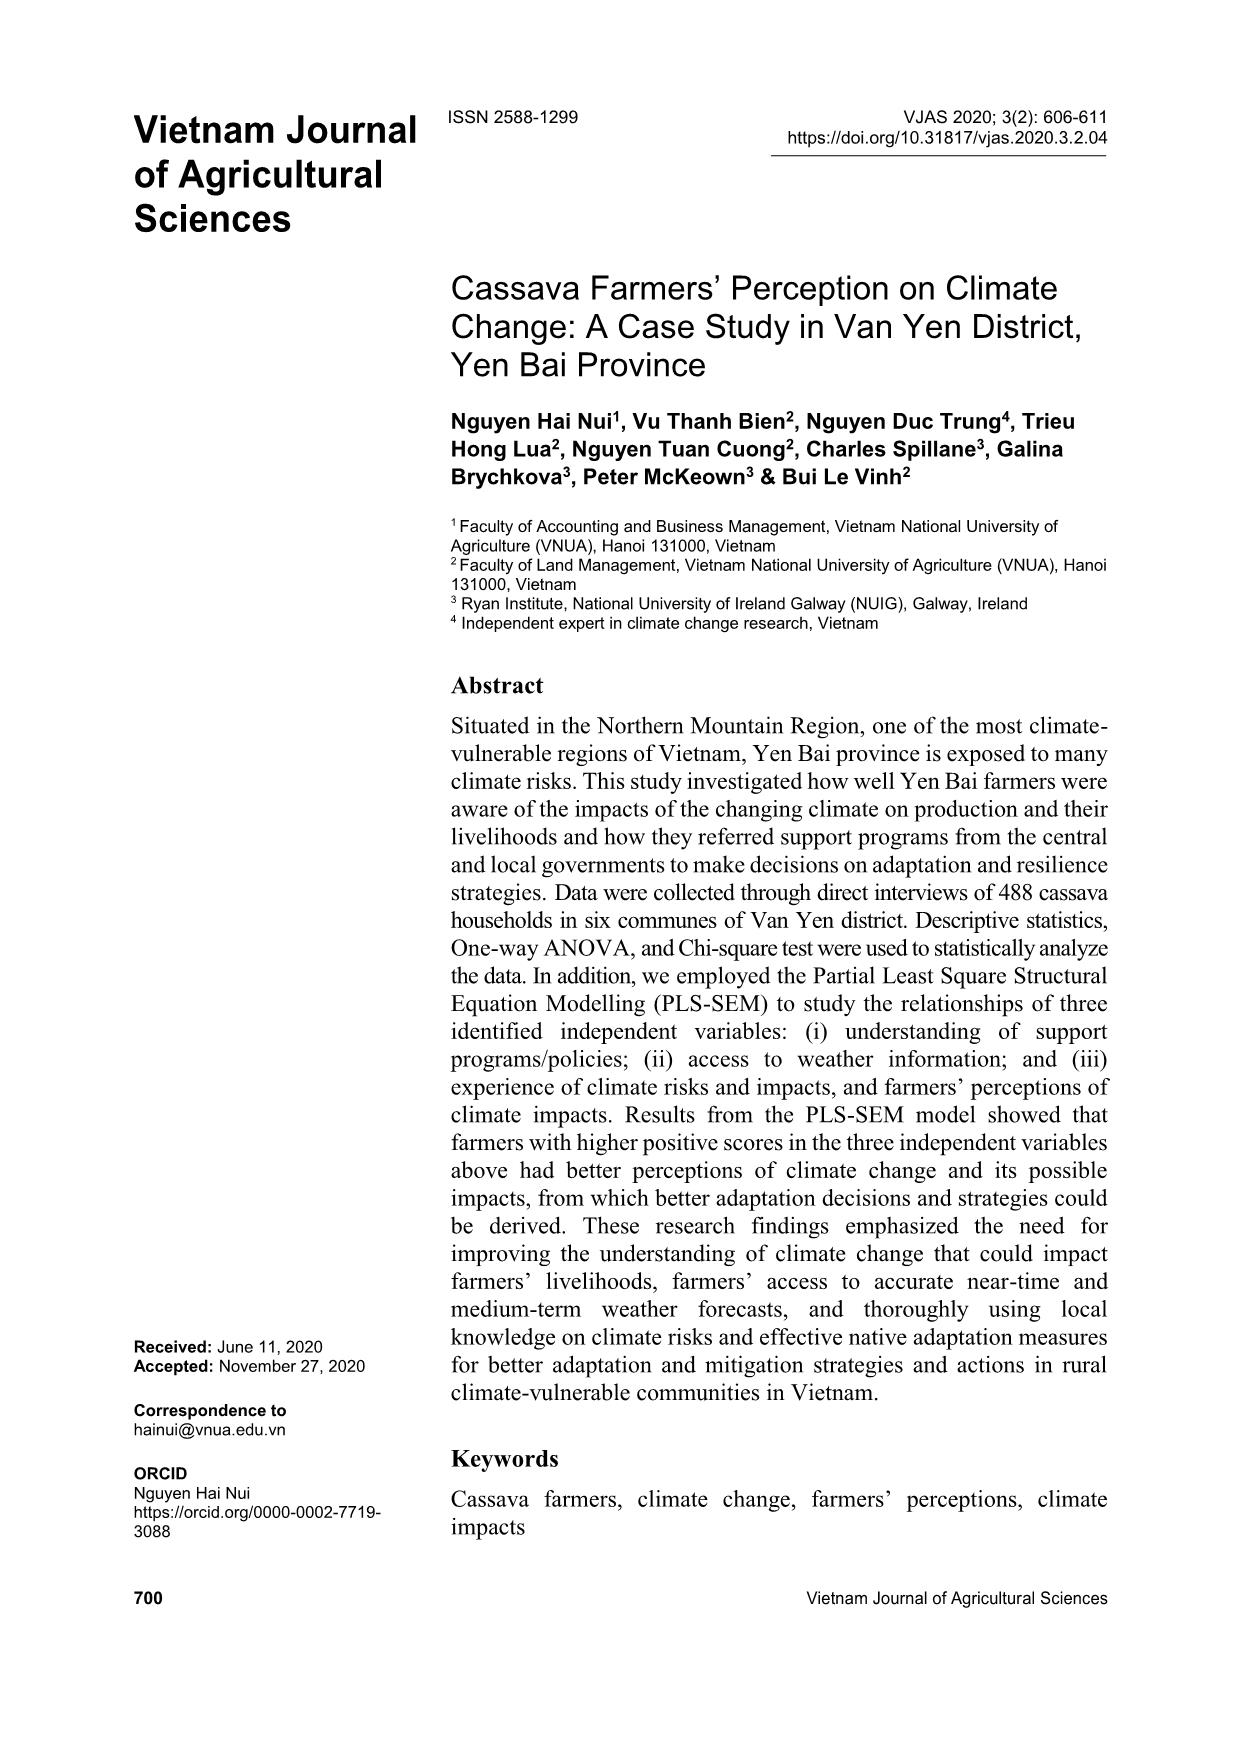 Cassava farmers’ perception on climate change: A case study in Van Yen district, Yen Bai province trang 1